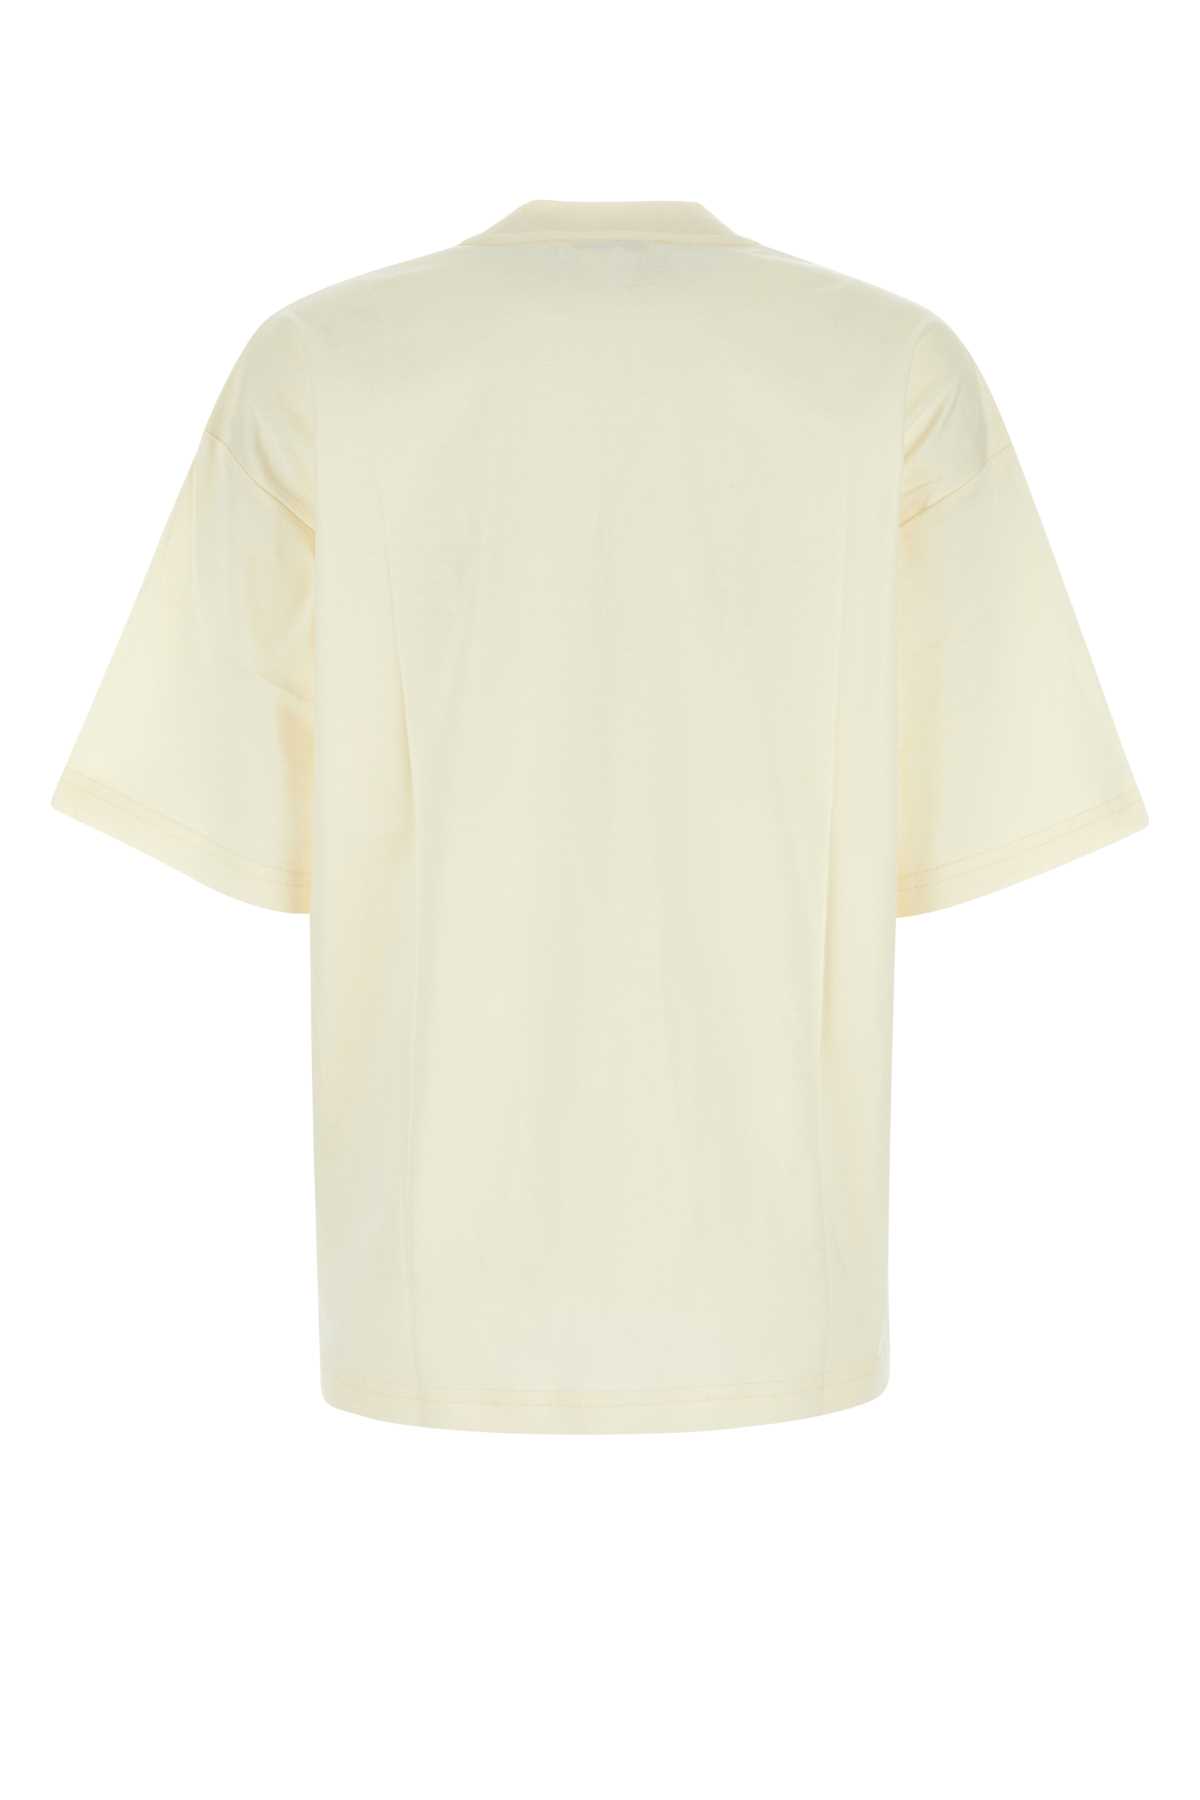 Lanvin Cream Cotton T-shirt